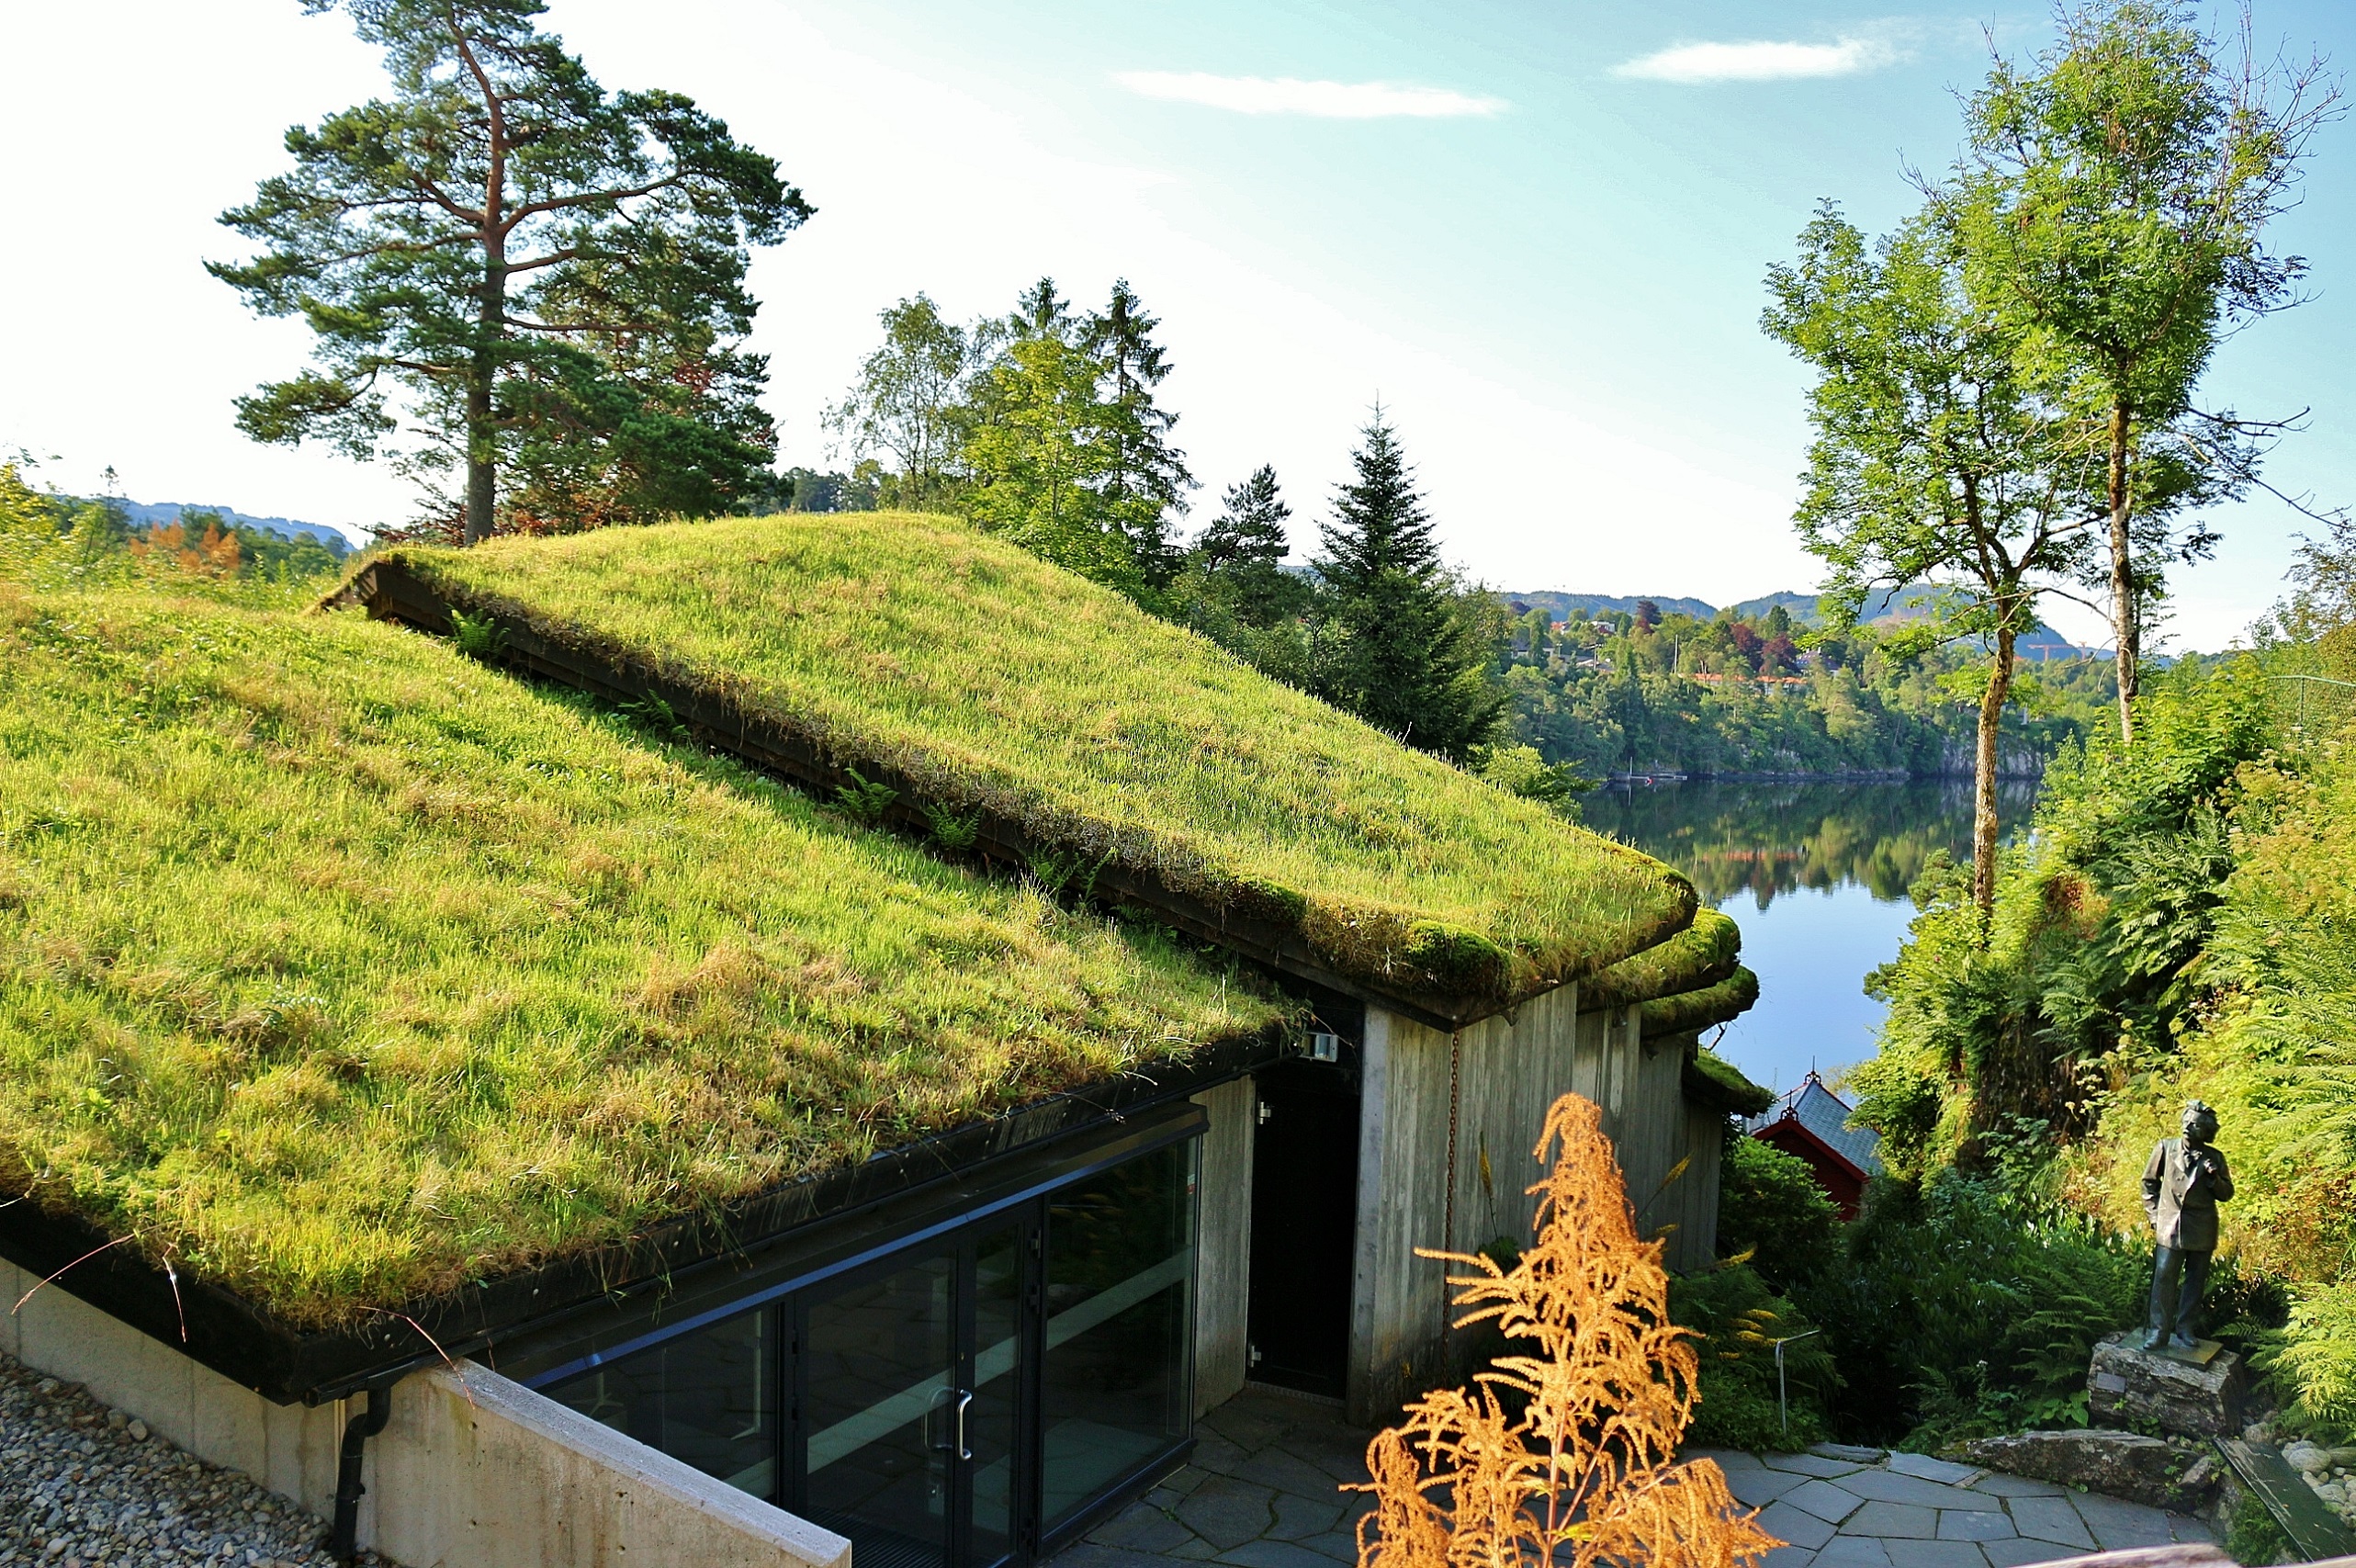 Foto: Casa museo Edvard Grieg - Bergen (Hordaland), Noruega